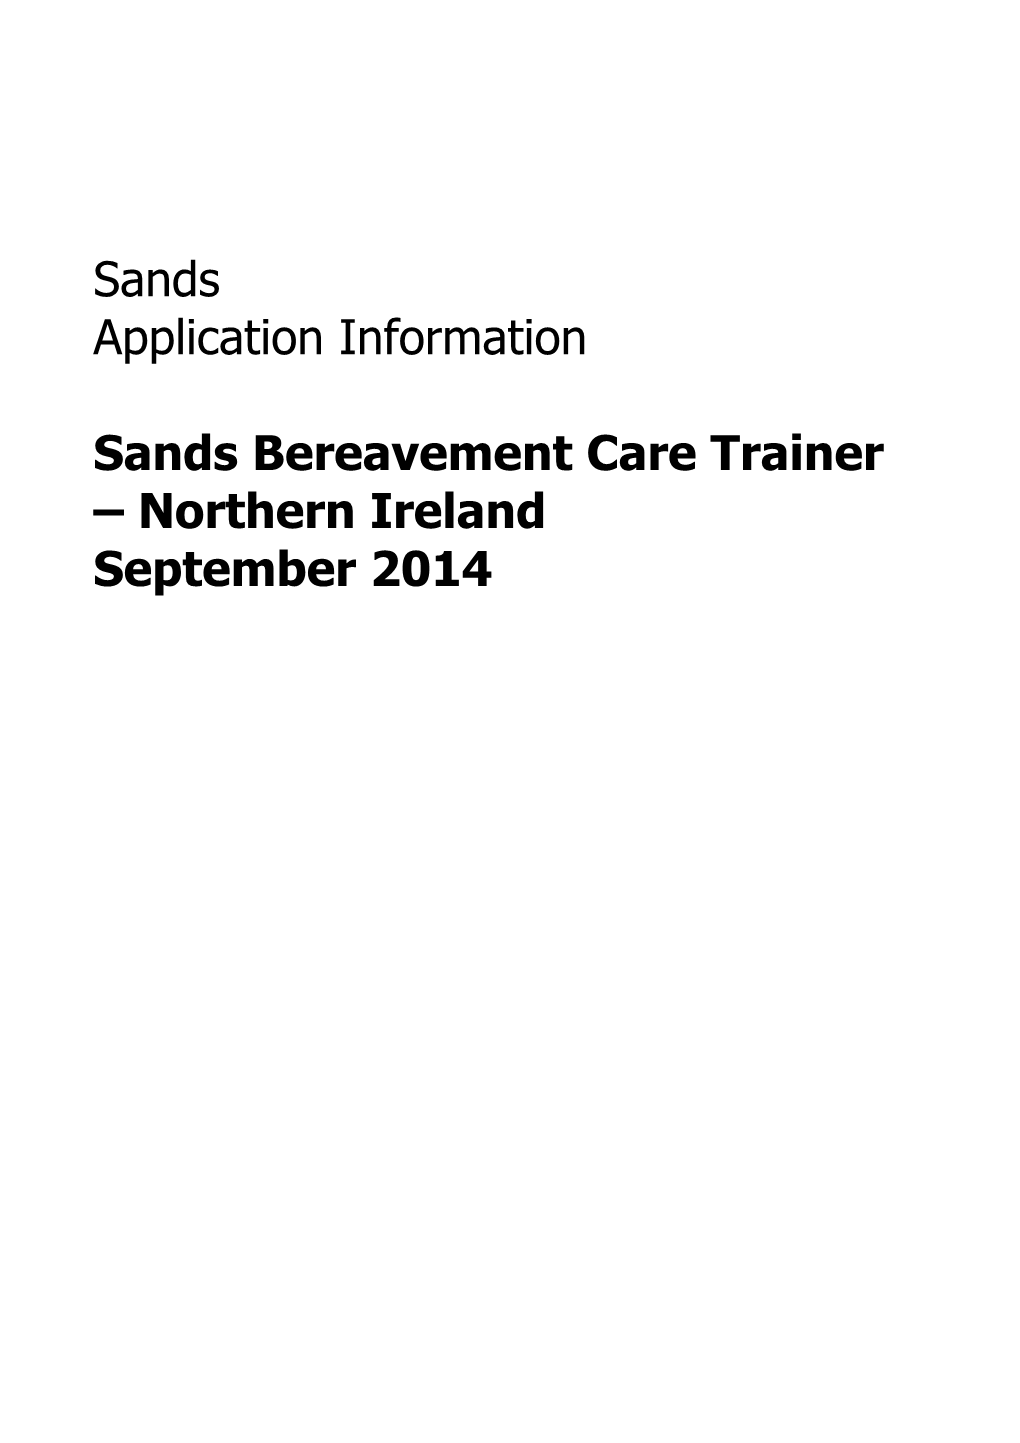 Sands Bereavement Care Trainer Northern Ireland